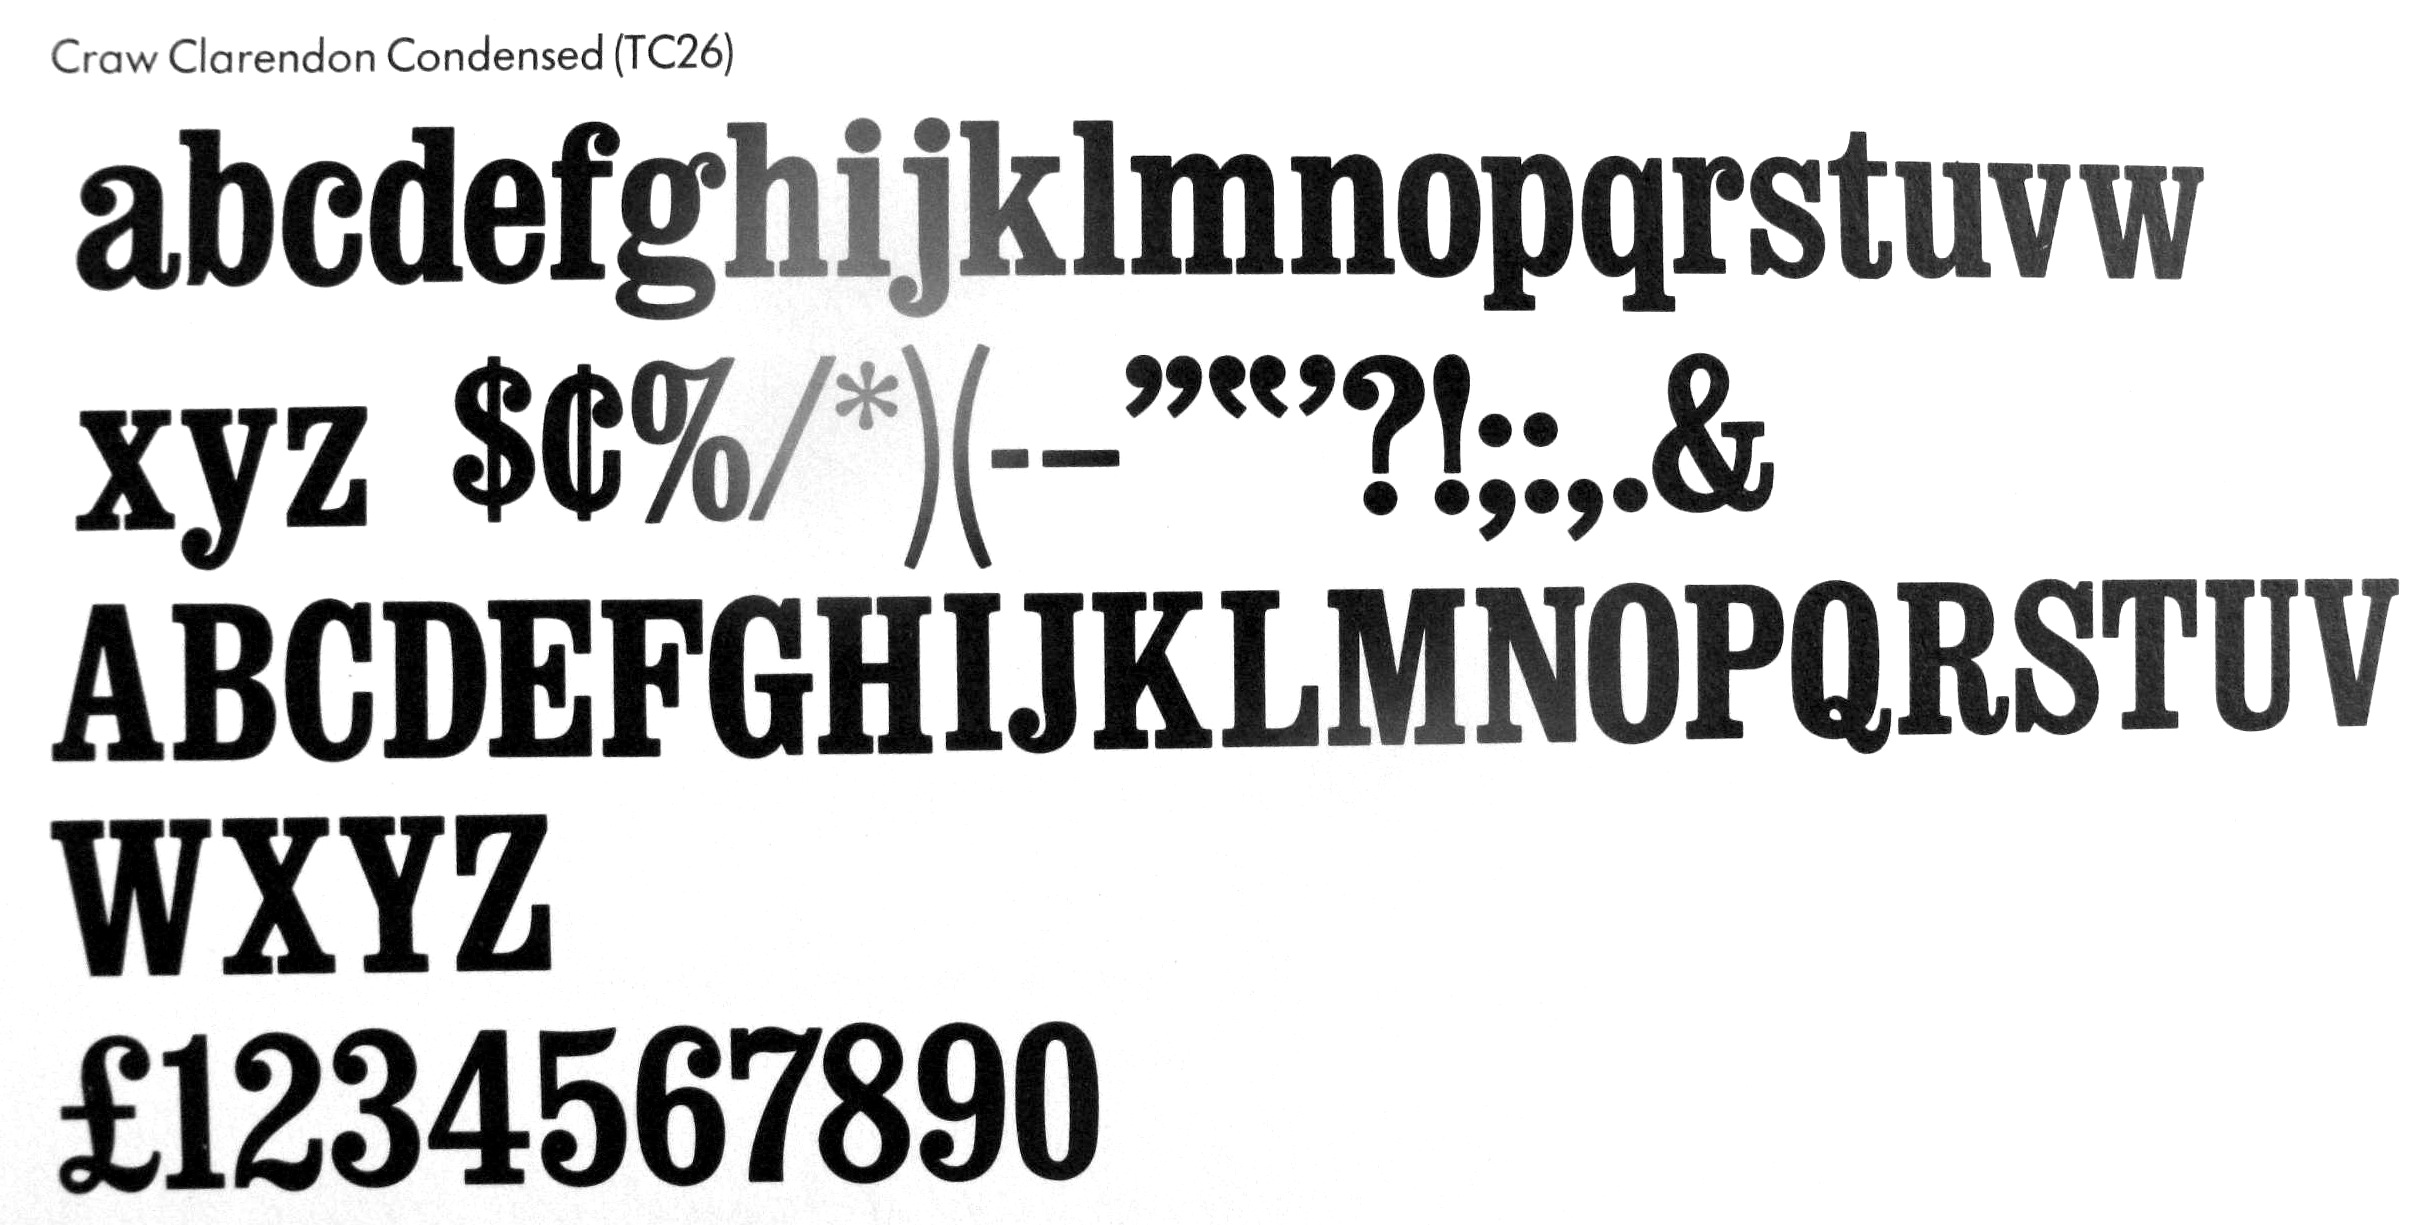 Similar free fonts for clarendon™ | whatfontis.com